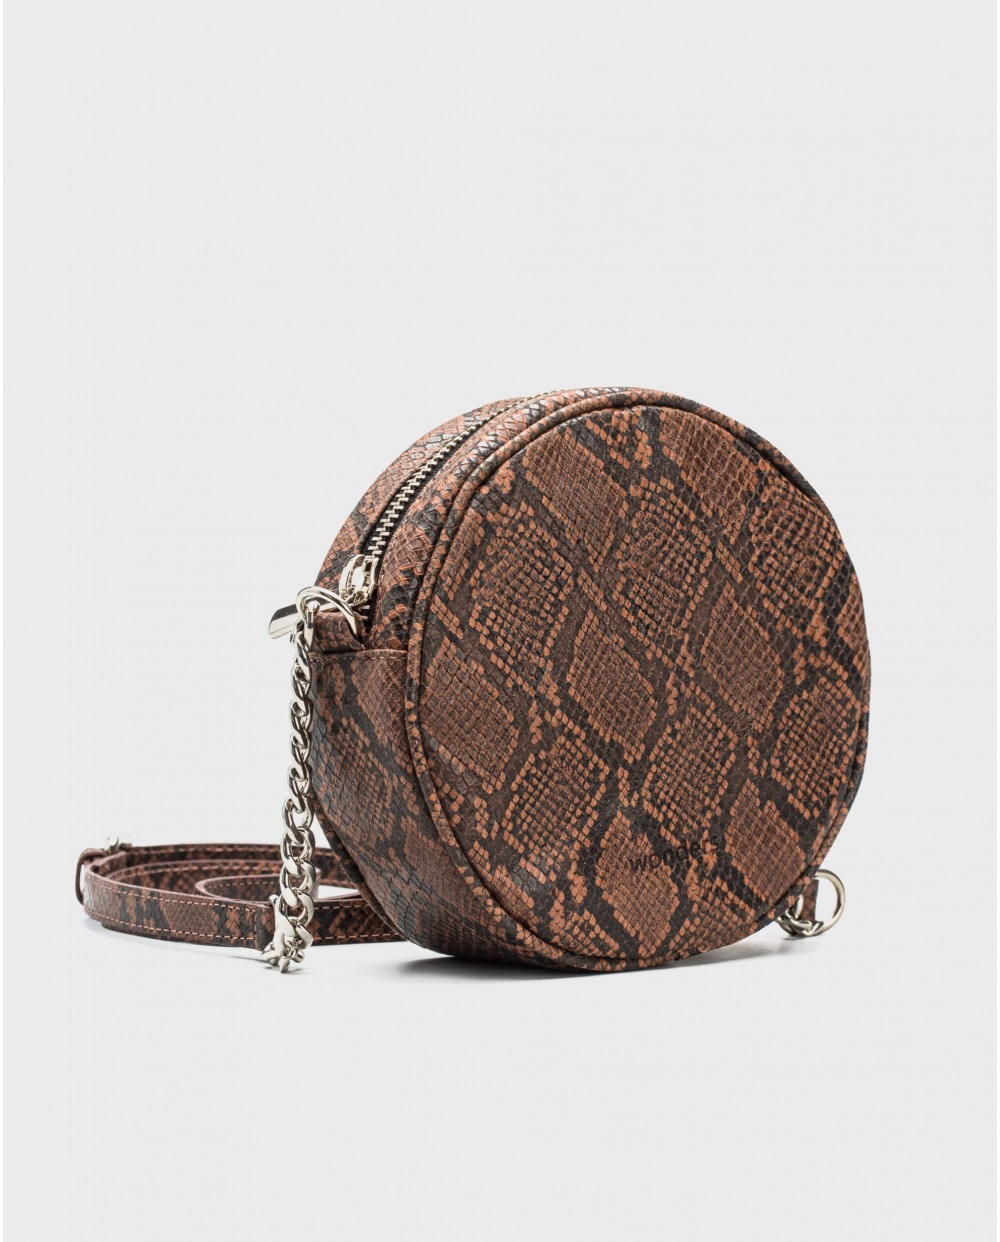 Wonders-Winter Outlet-Circular handbag with crossbody strap